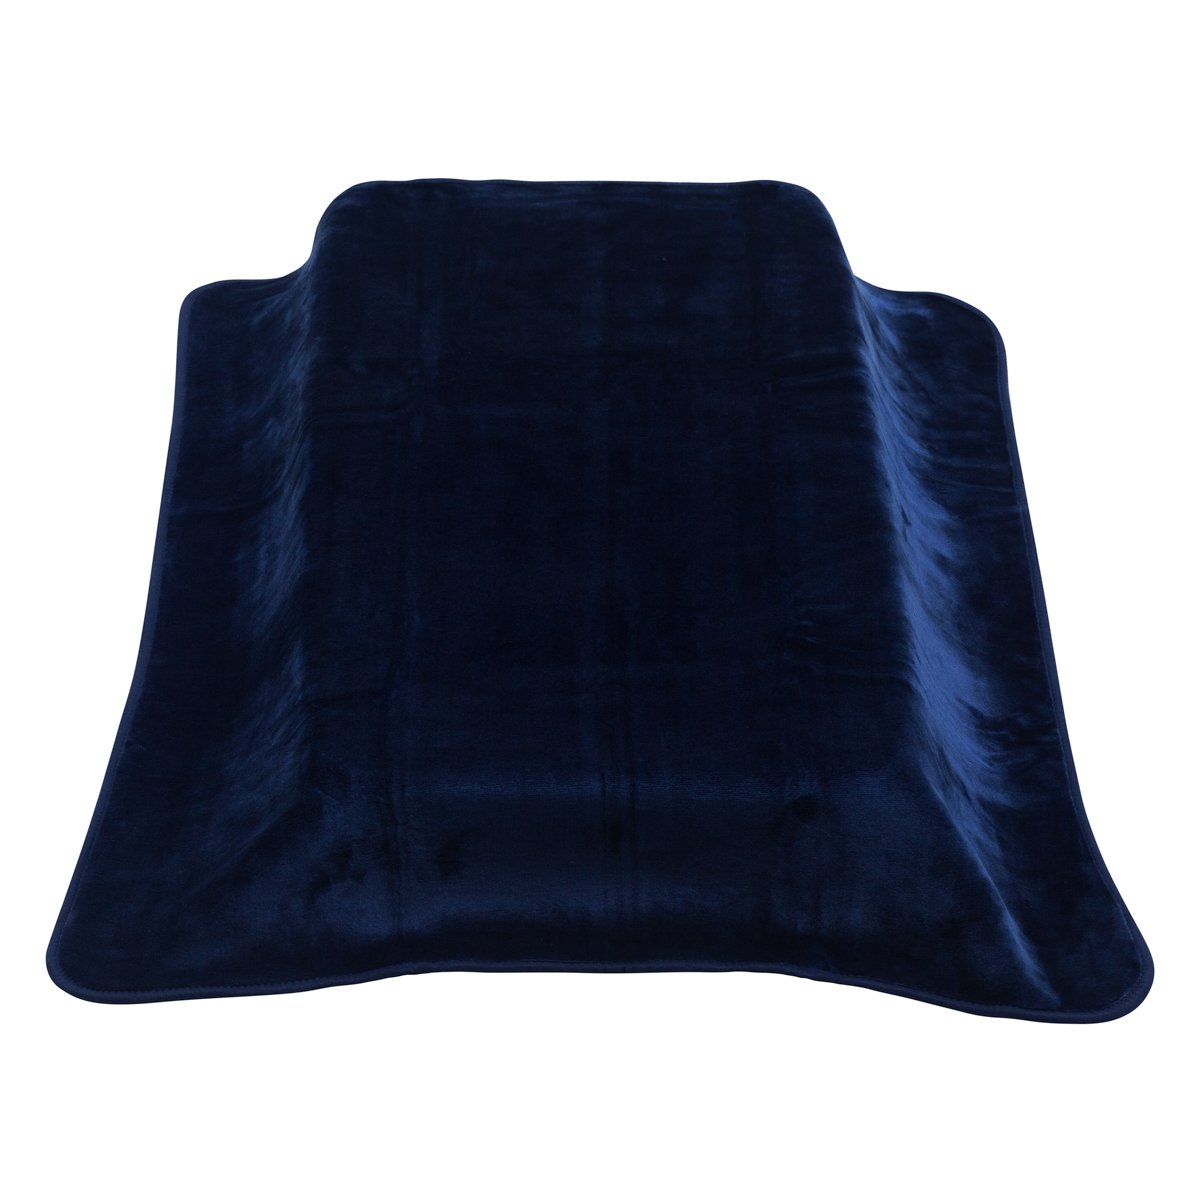 Cambrass Raschel Cradle Be Solid Marino 37978 Blanket 110 x 140 cm Blue